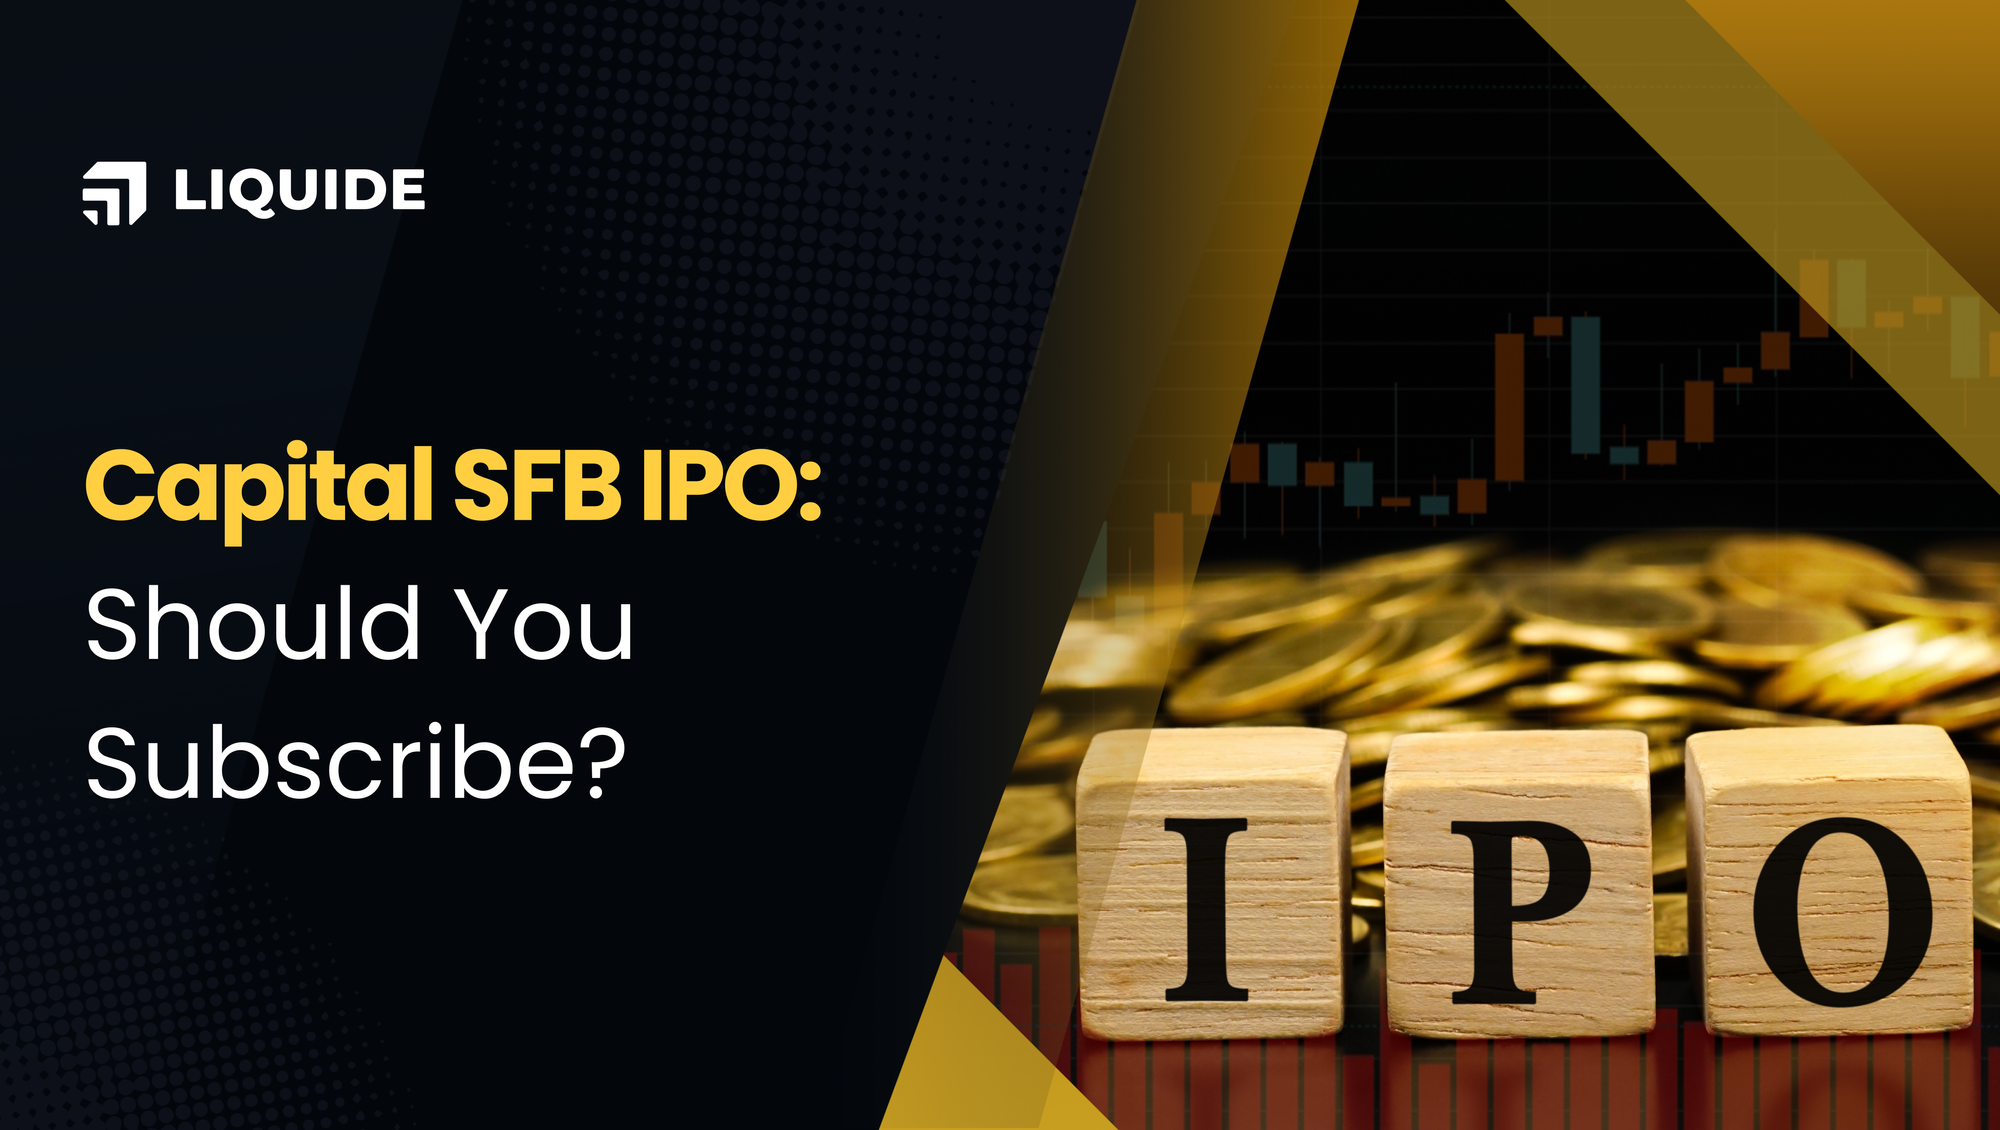 Capital SFB IPO, Capital Small Finance Bank IPO, Liquide, Latest IPO, IPO news, Recent IPO, HDFC, ICICI, SBI, Kotak Mahindra